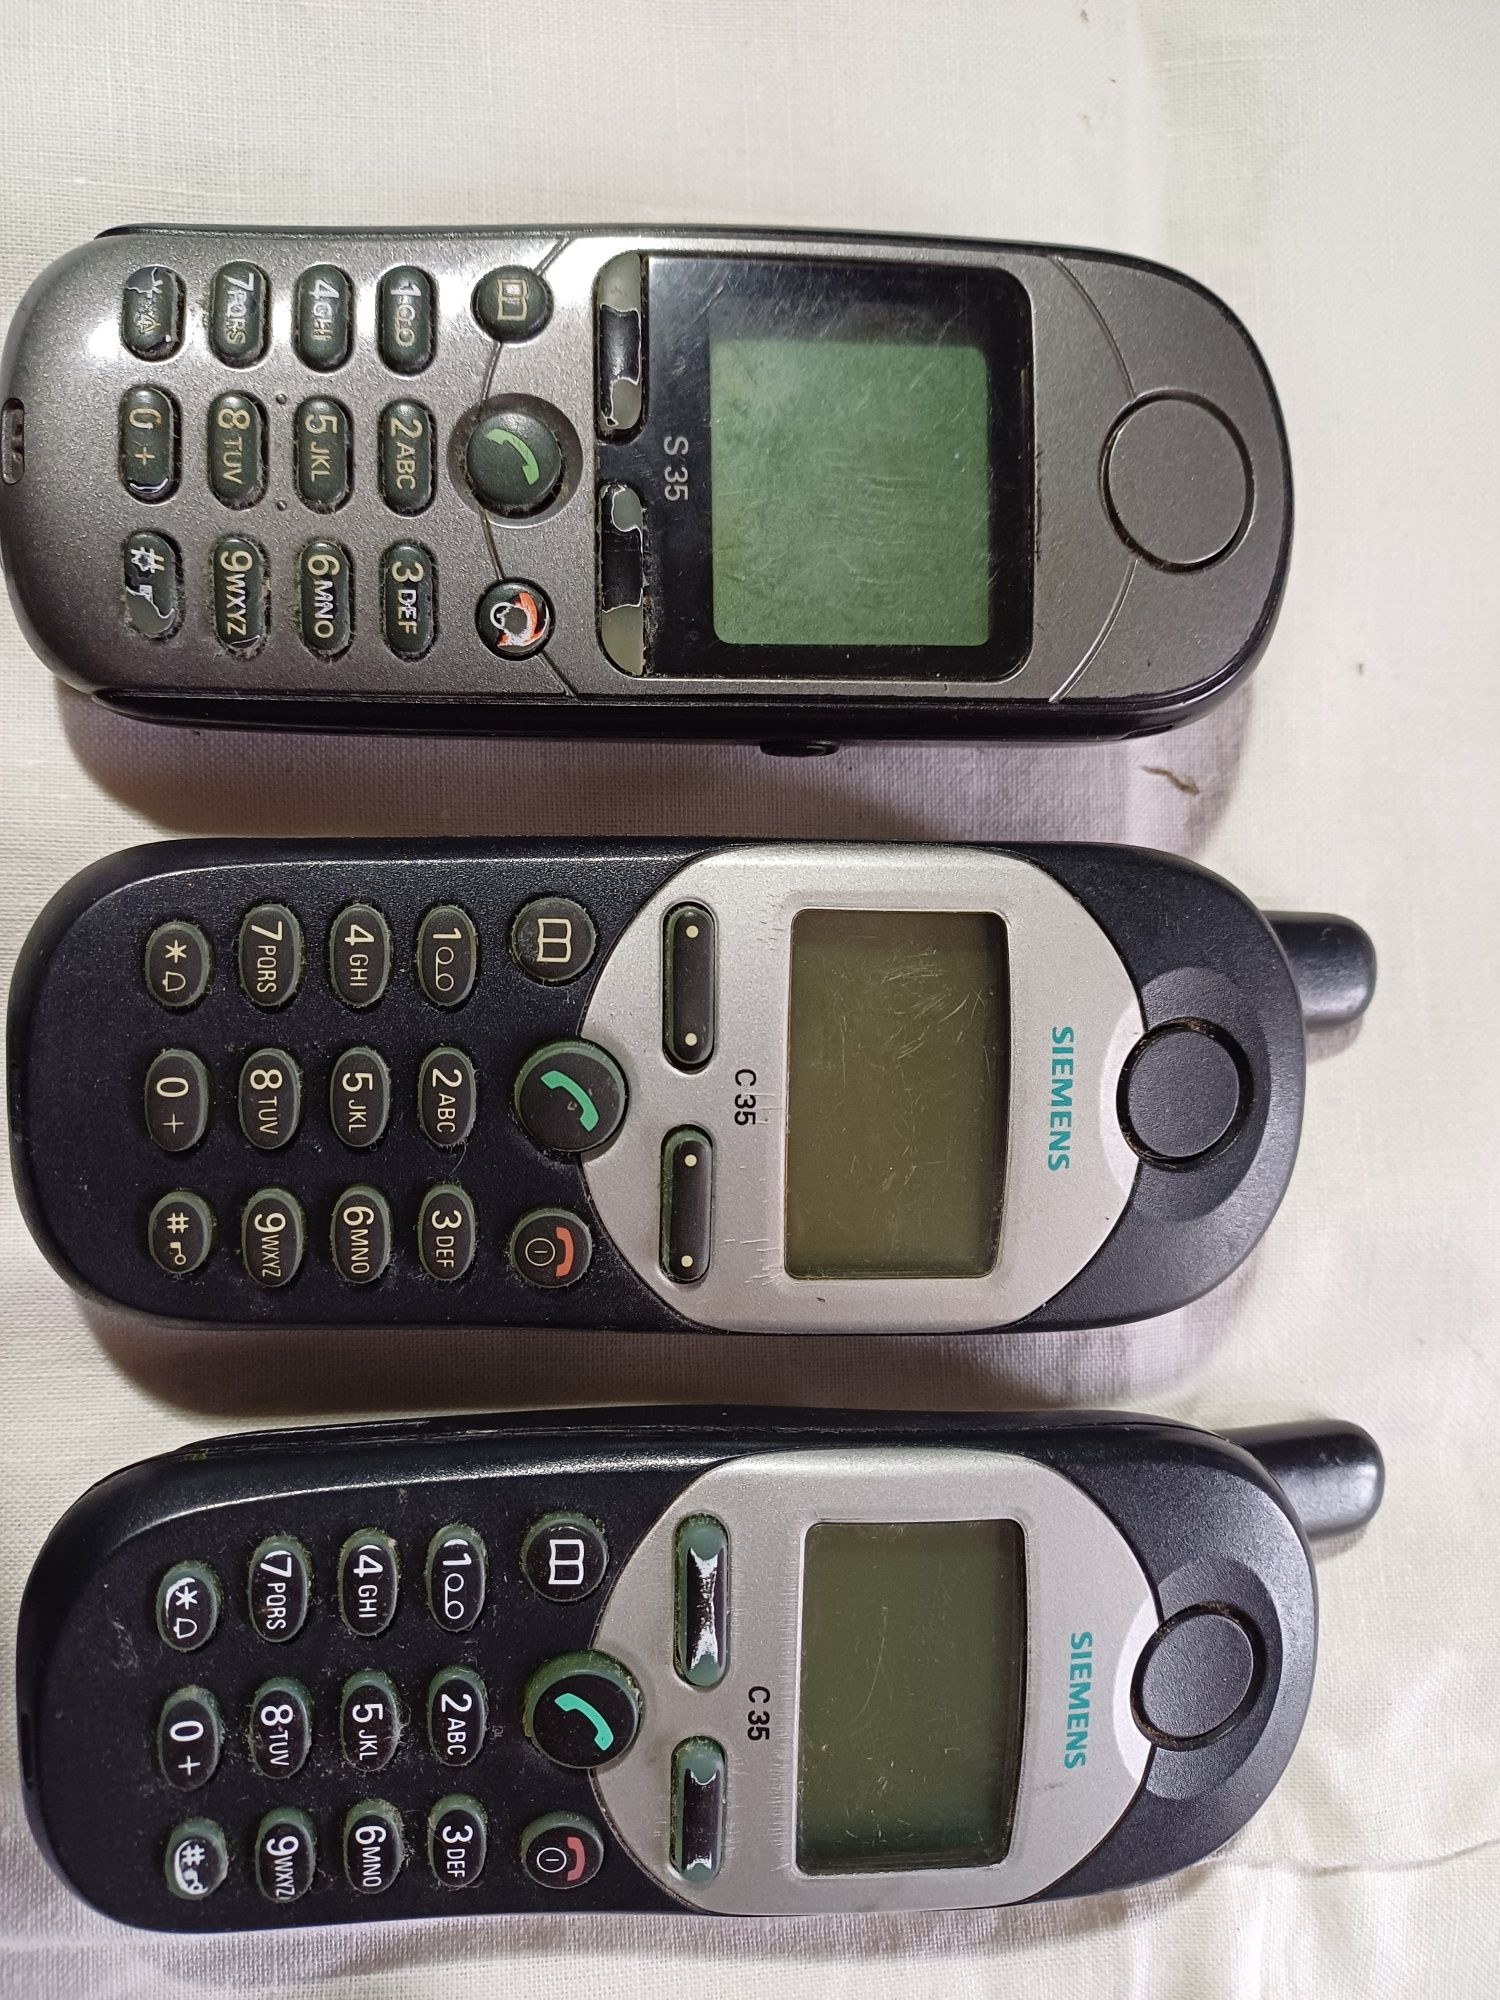 Stare telefony Siemens 6szt. C35 S35 C25 S25